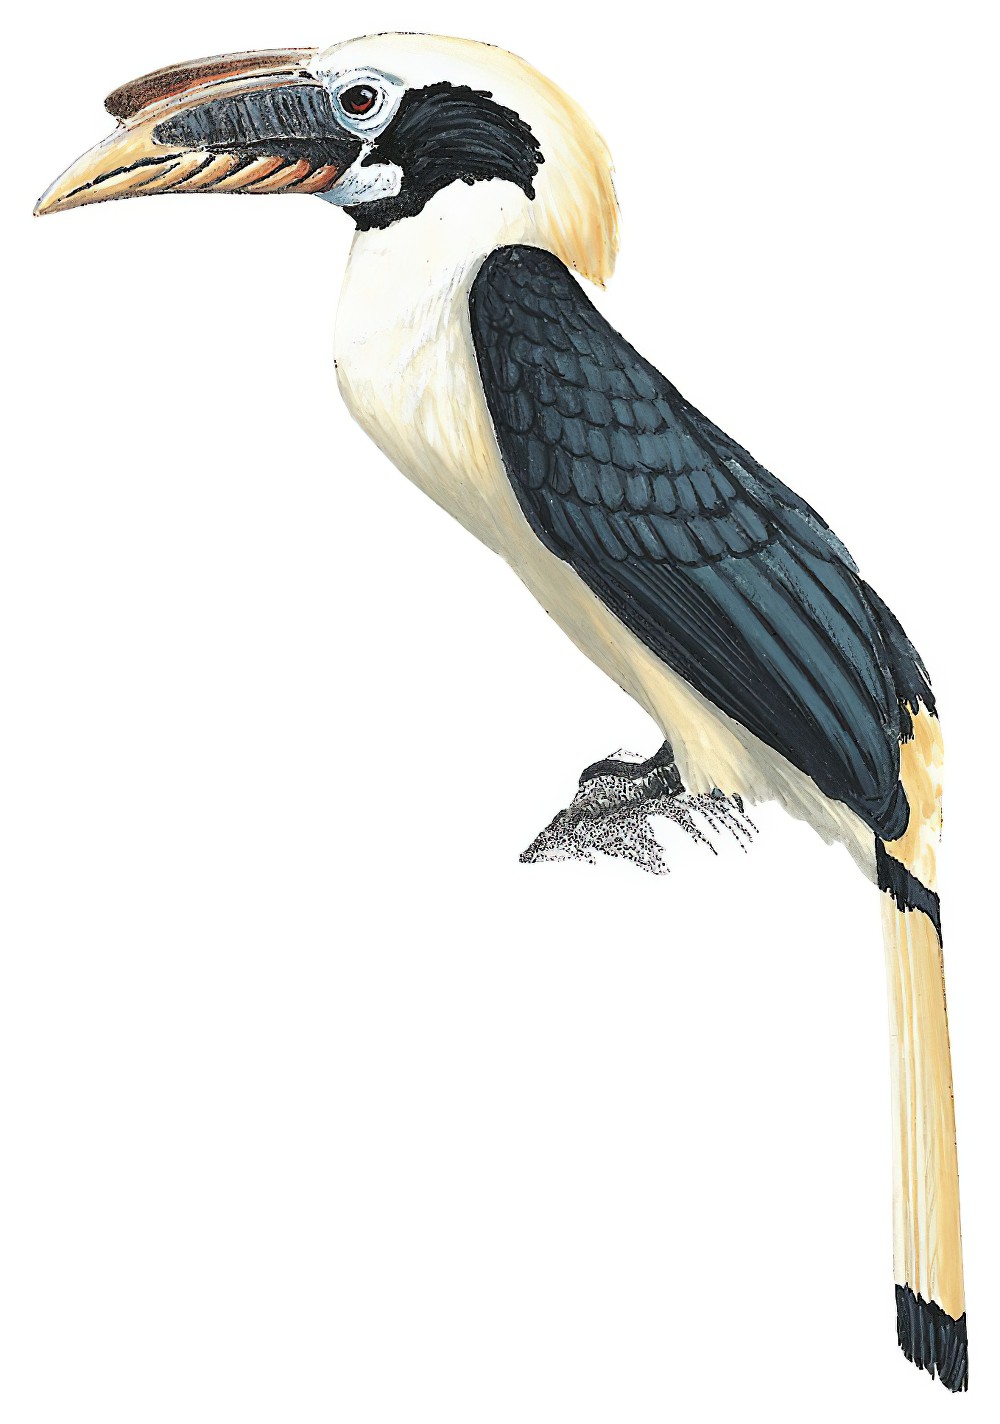 Samar Hornbill / Penelopides samarensis